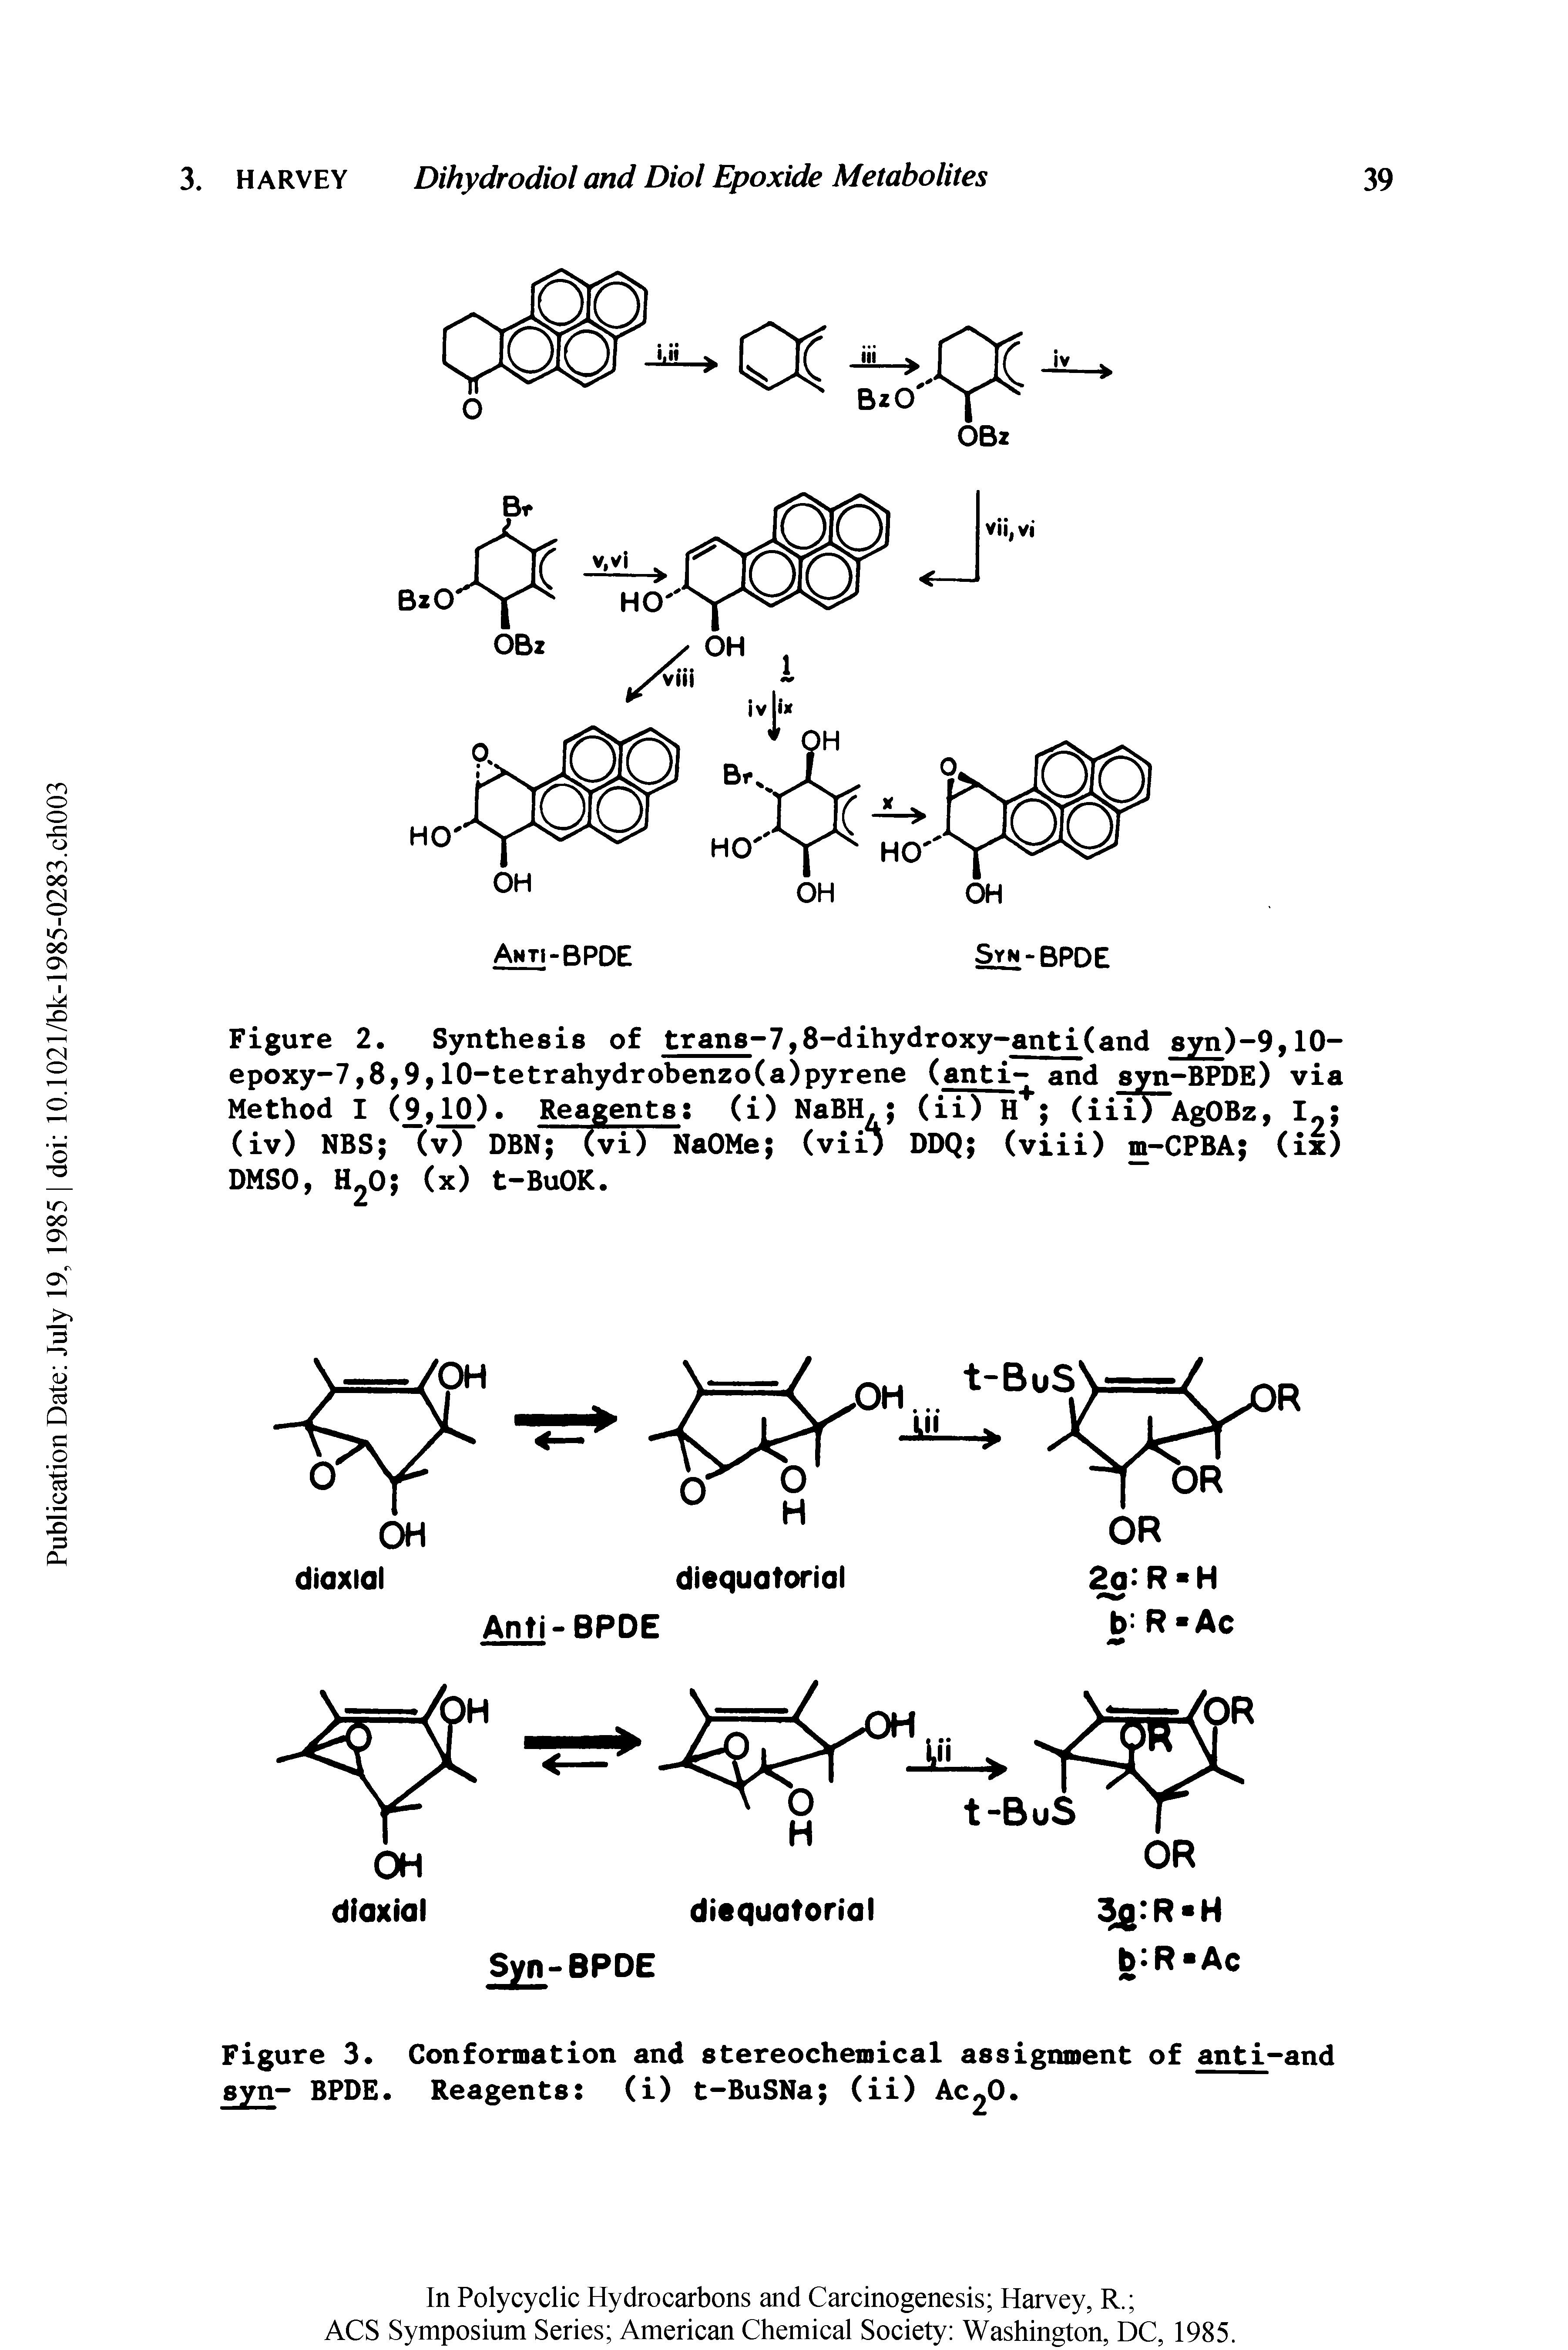 Figure 2. Synthesis of trans-7,8-dihydroxy-anti(and syn)-9,10-epoxy-7,8,9,10-tetrahydrobenzo(a)pyrene (anti- and syn-BPDE) via Method I ( ,2 ). Reagents (i) NaBH, (ii) H+ (iii) AgOBz, I- (iv) NBS (v) DBN (vi) NaOMe (vii) DDQ (viii) m-CPBA (ix) DMSO, H20 (x) t-BuOK.